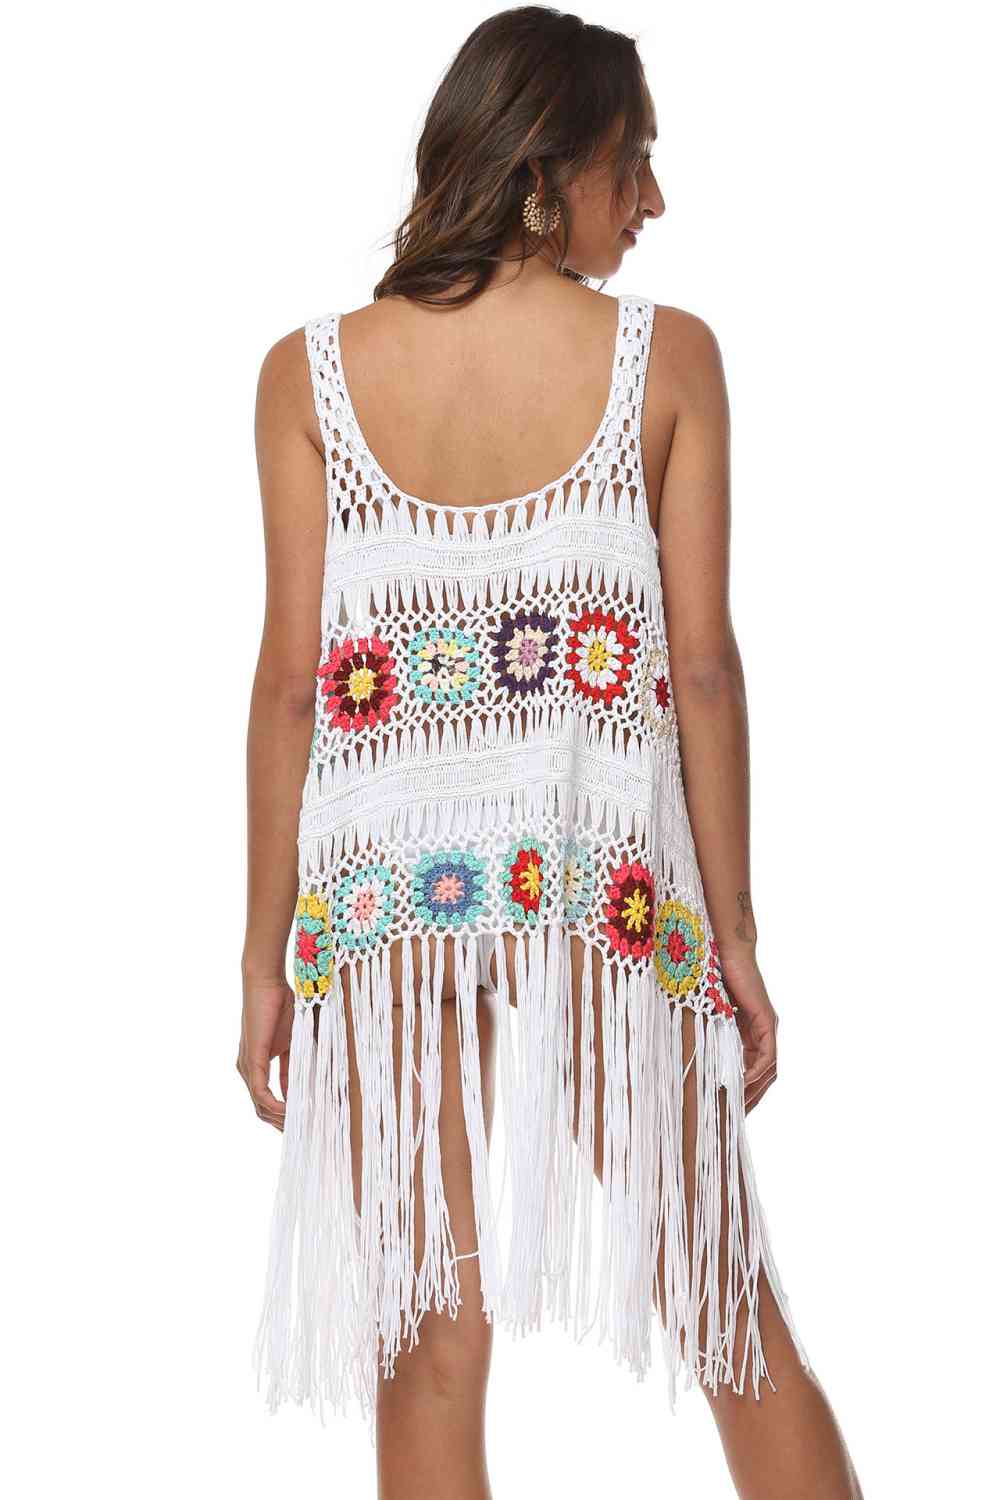 Boho Beach Chic Fringe Detail Embroidery Sleeveless Cover-Up